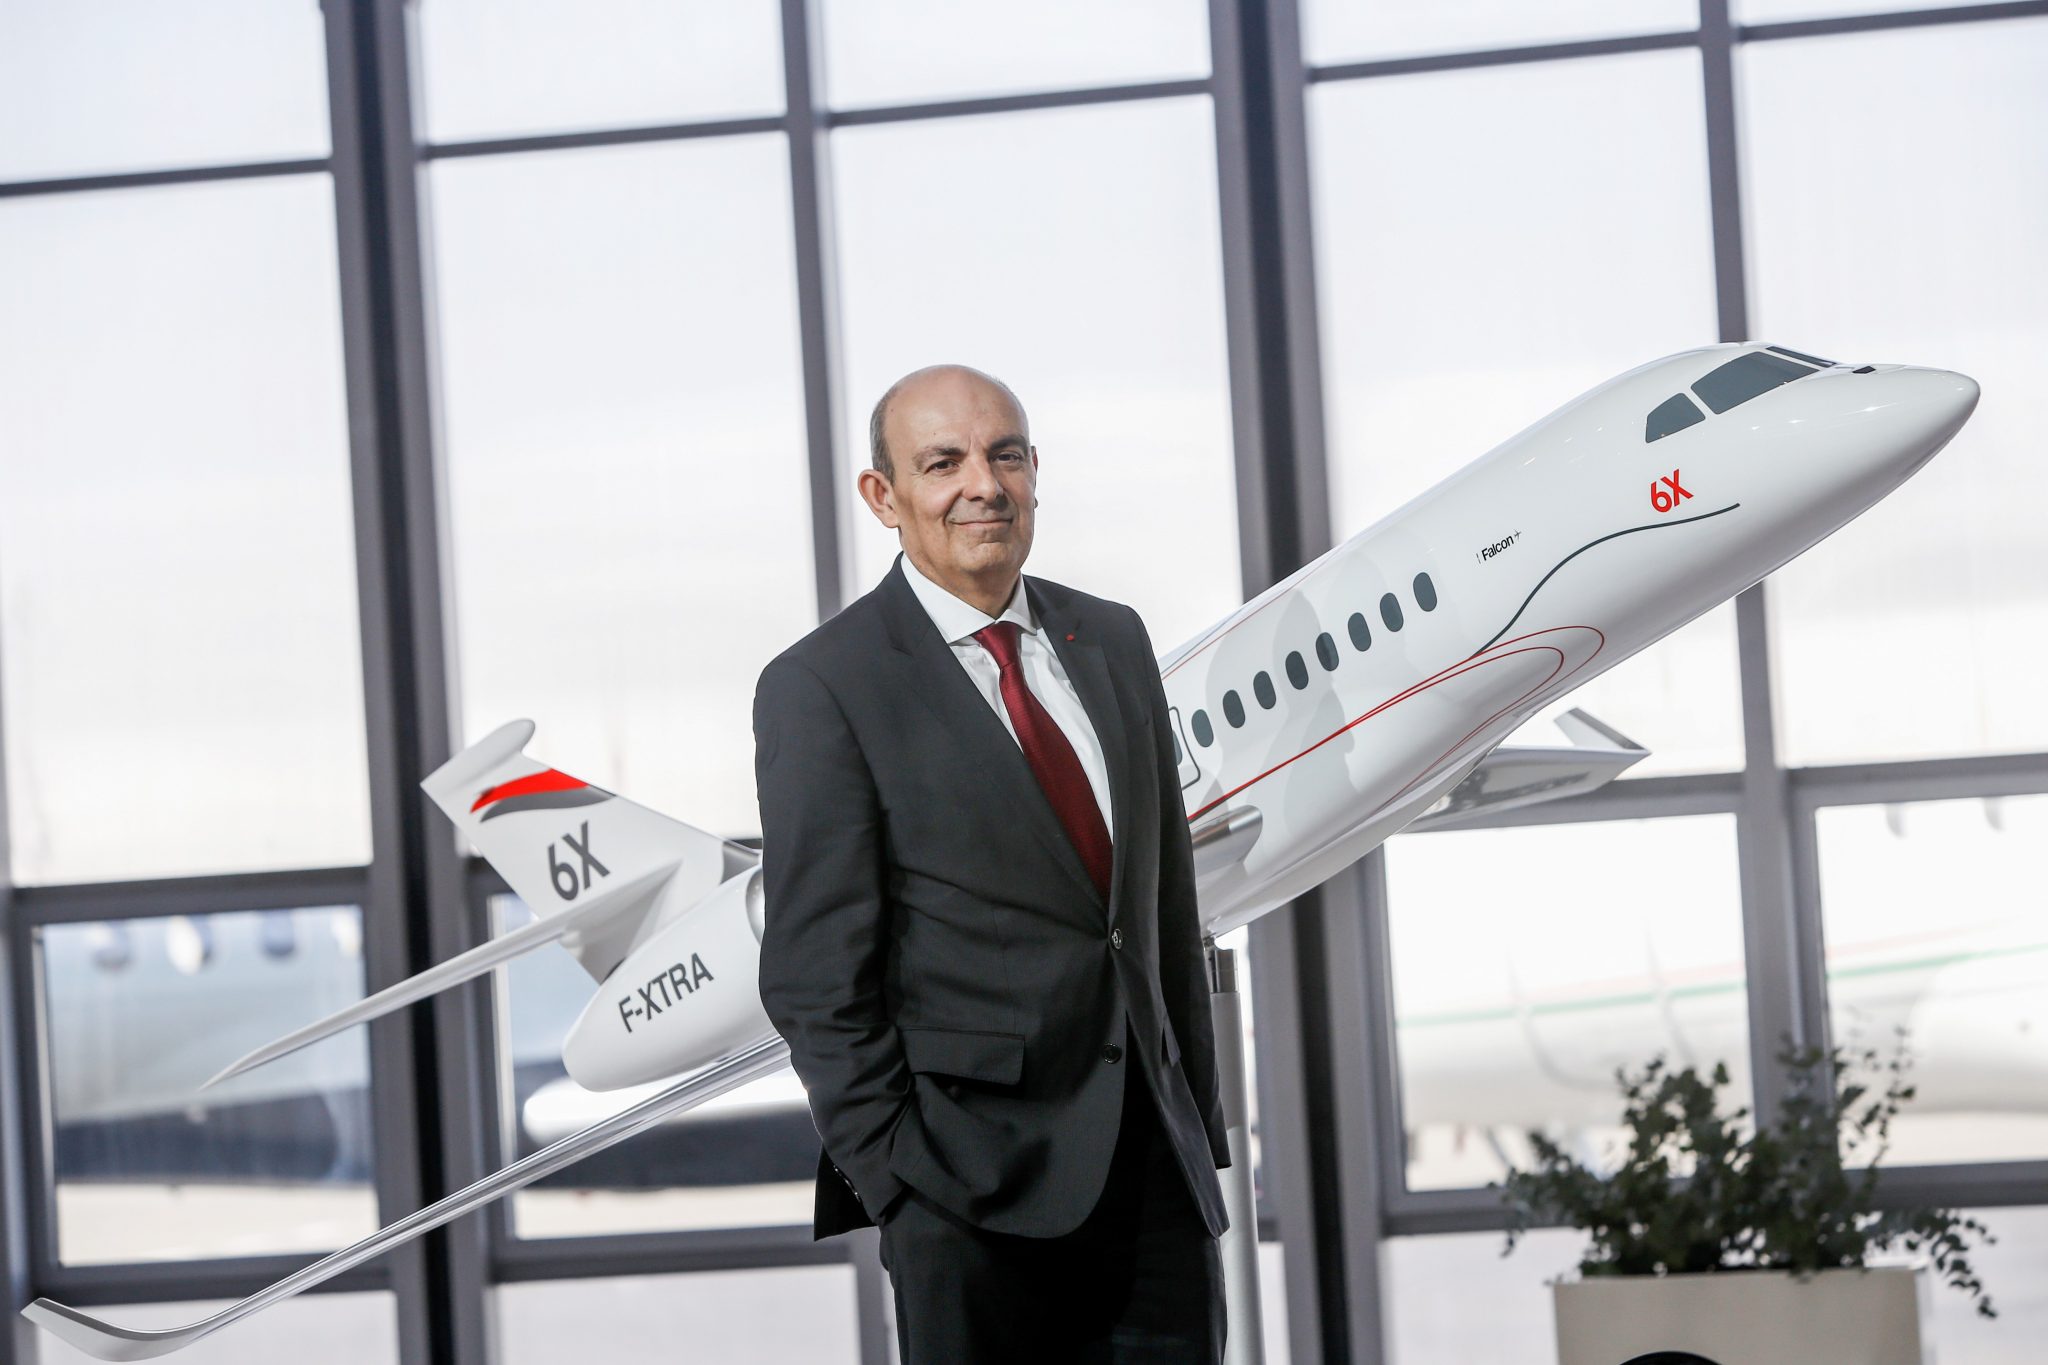 Trappier to Lead Dassault Corporate in 2025